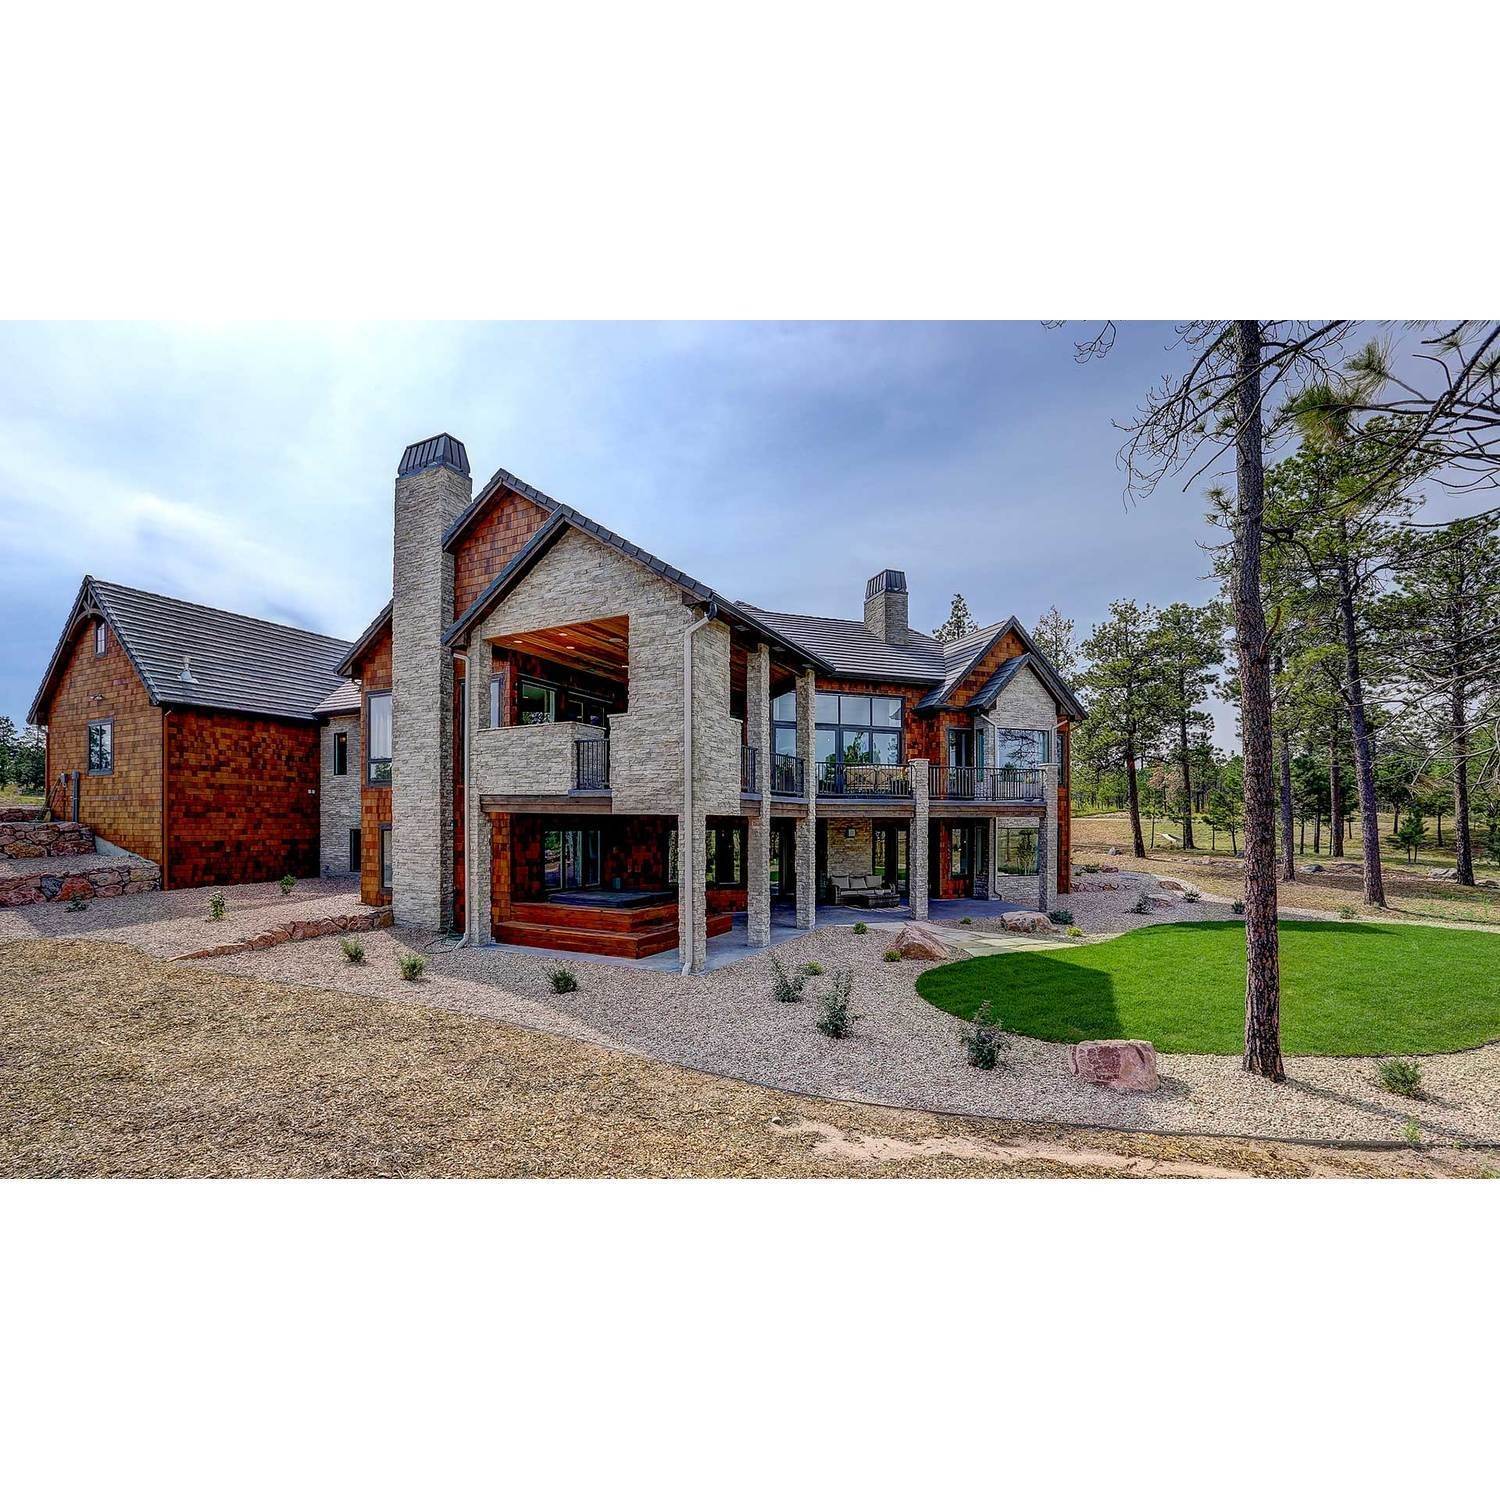 42. Galiant Homes xây dựng tại 4783 Farmingdale Dr, Colorado Springs, CO 80918